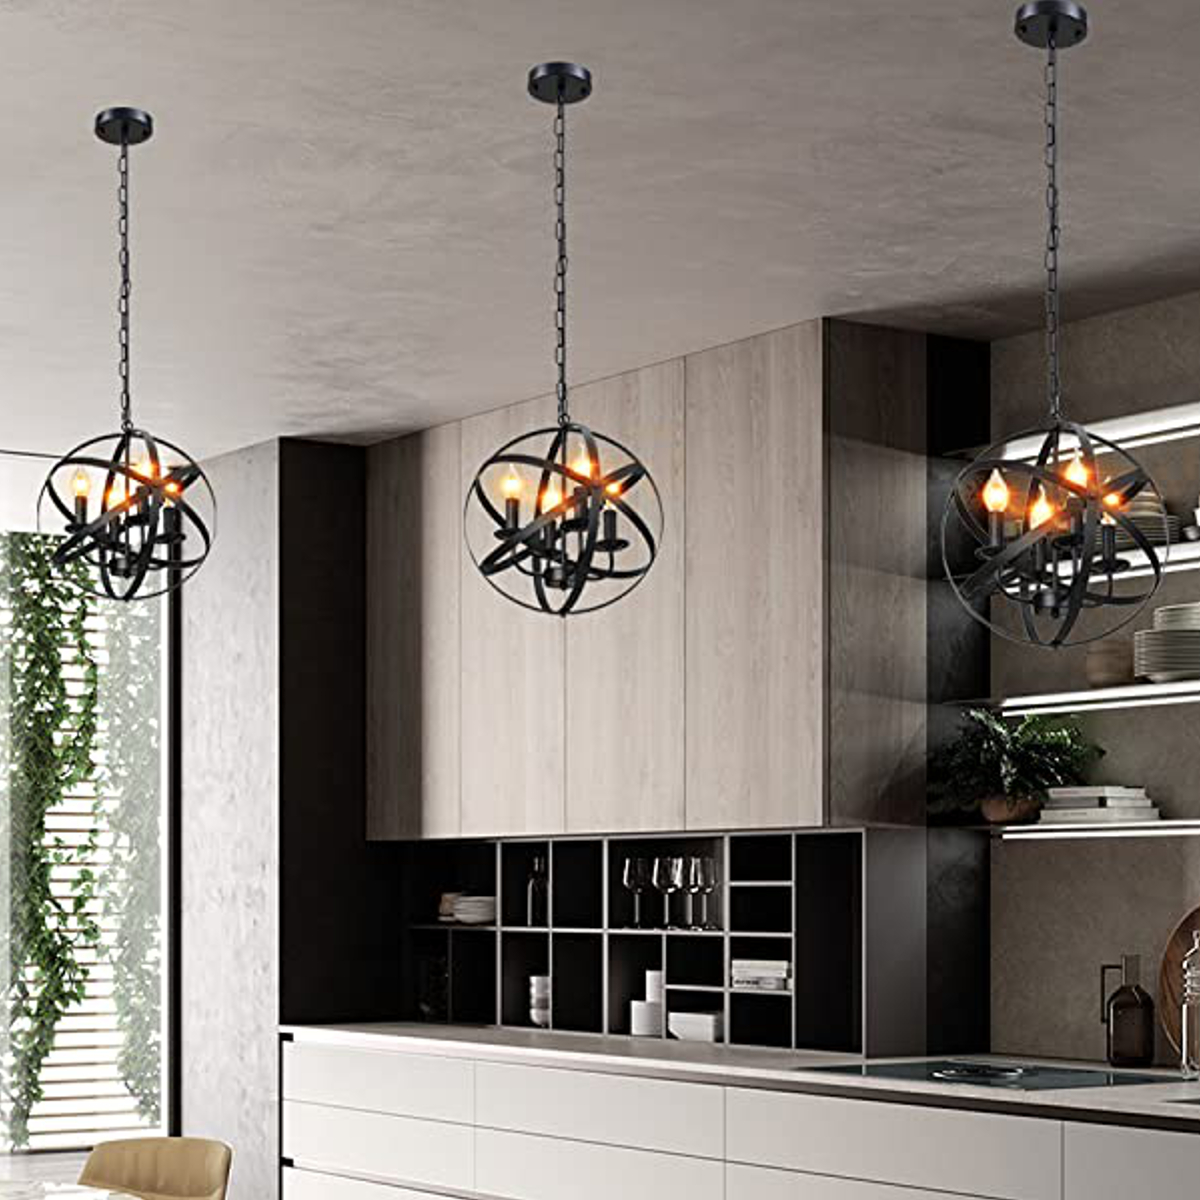 Antique-Style-Industrial-Vintage-Lighting-Ceiling-Chandelier-4-Lights-Decorative-Luminaire-Metal-Han-1754124-7